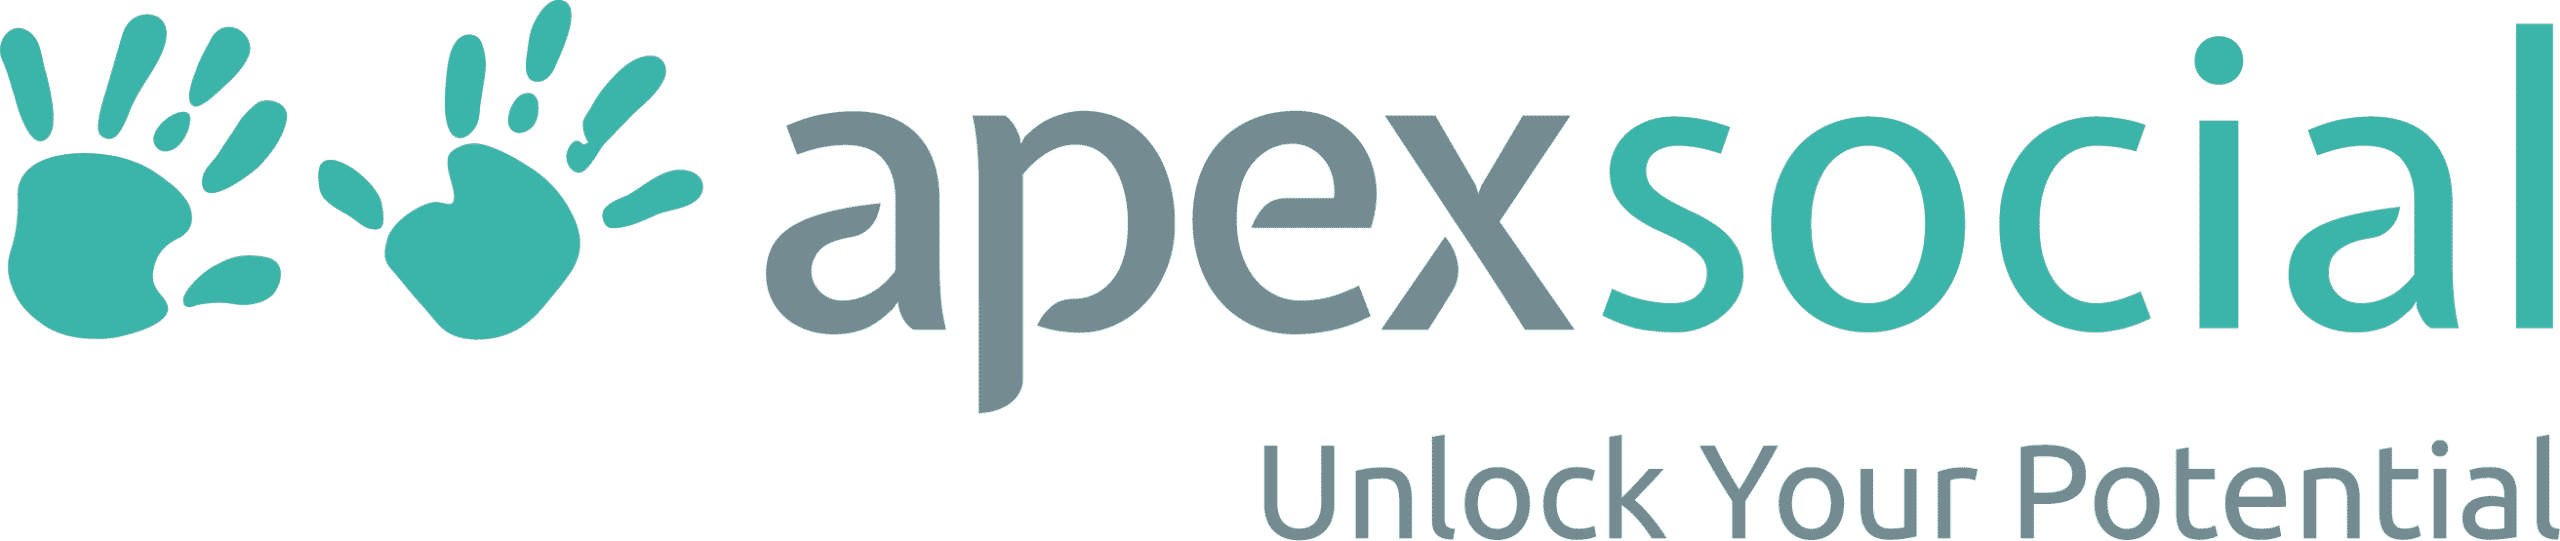 Apex-Social-logo-Unlock-Your-Potential (1)